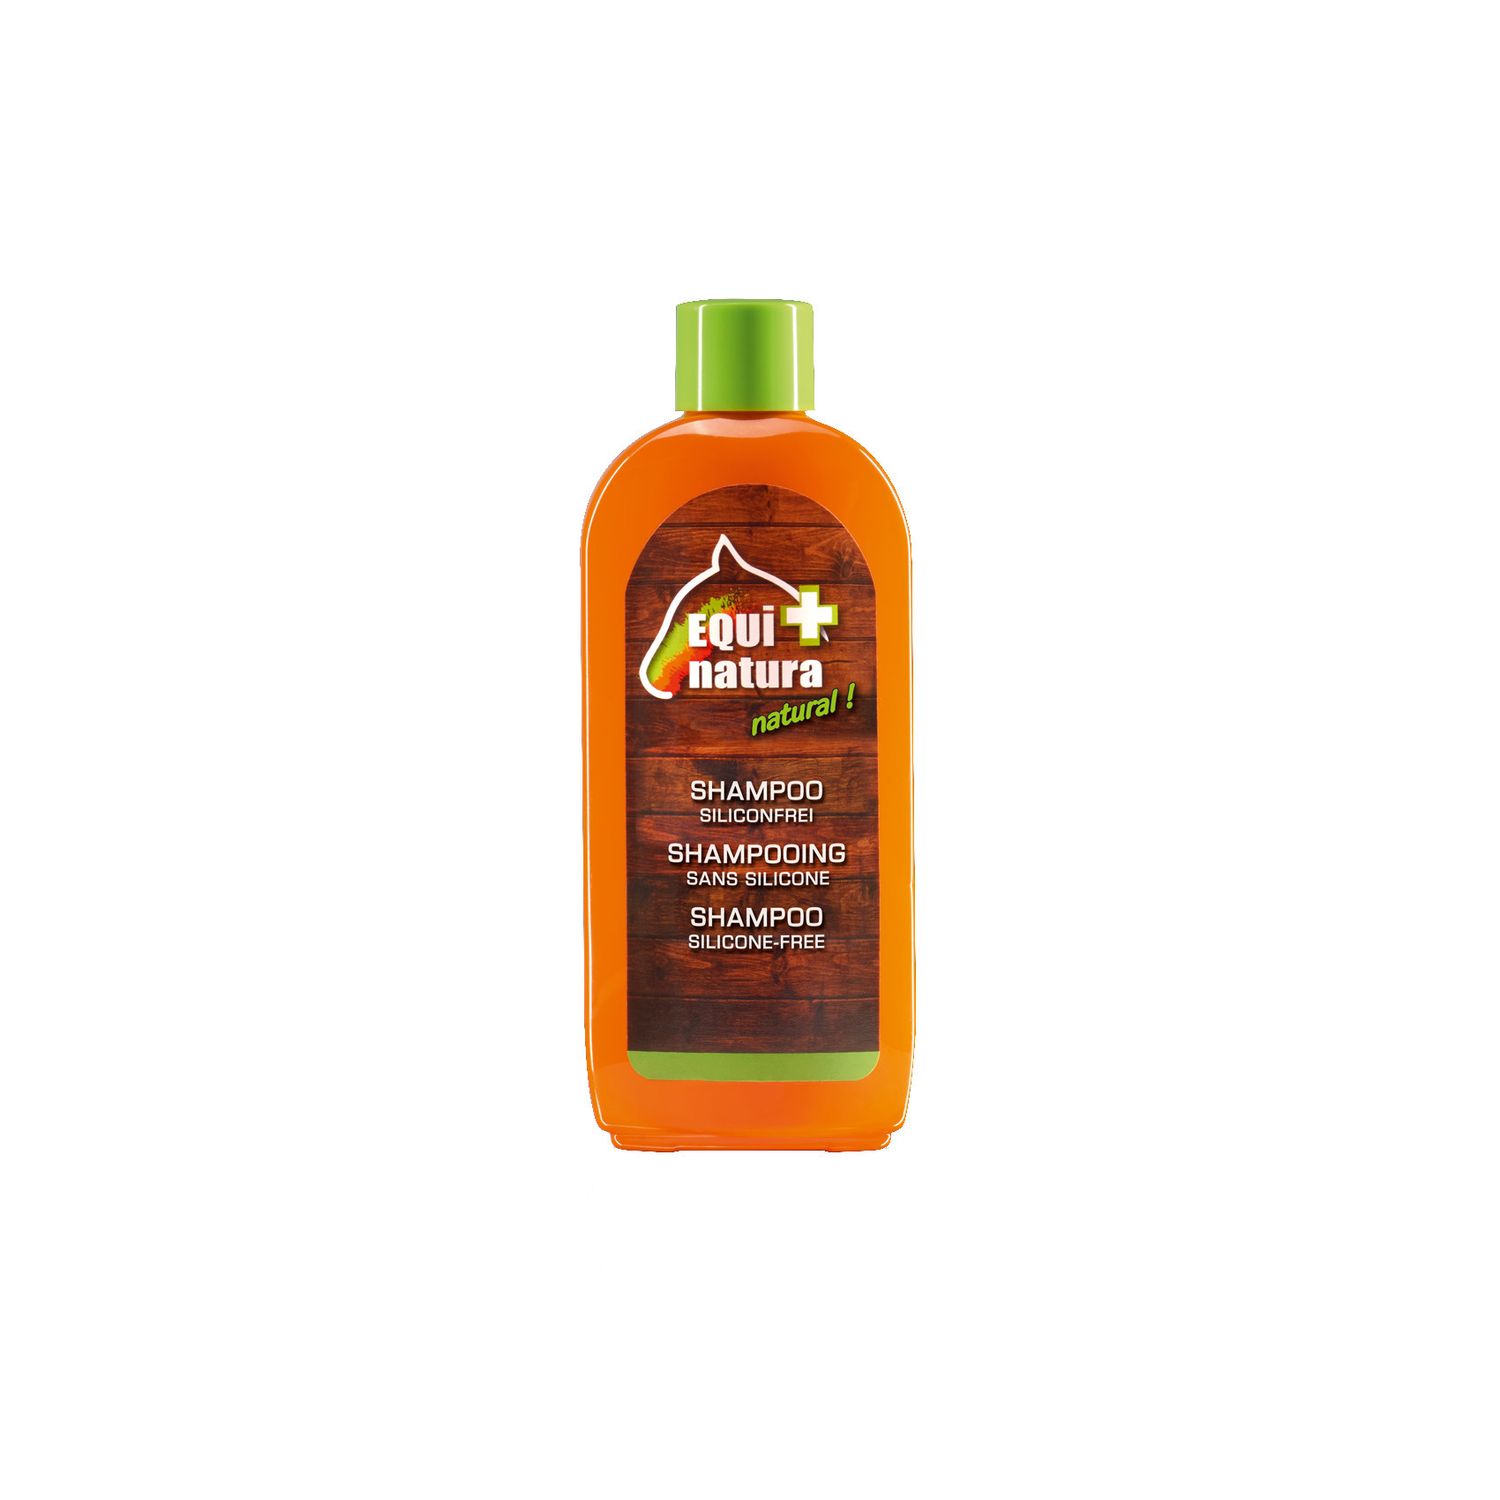 EQUInatura Shampoo 250 ml von EQUI+natura